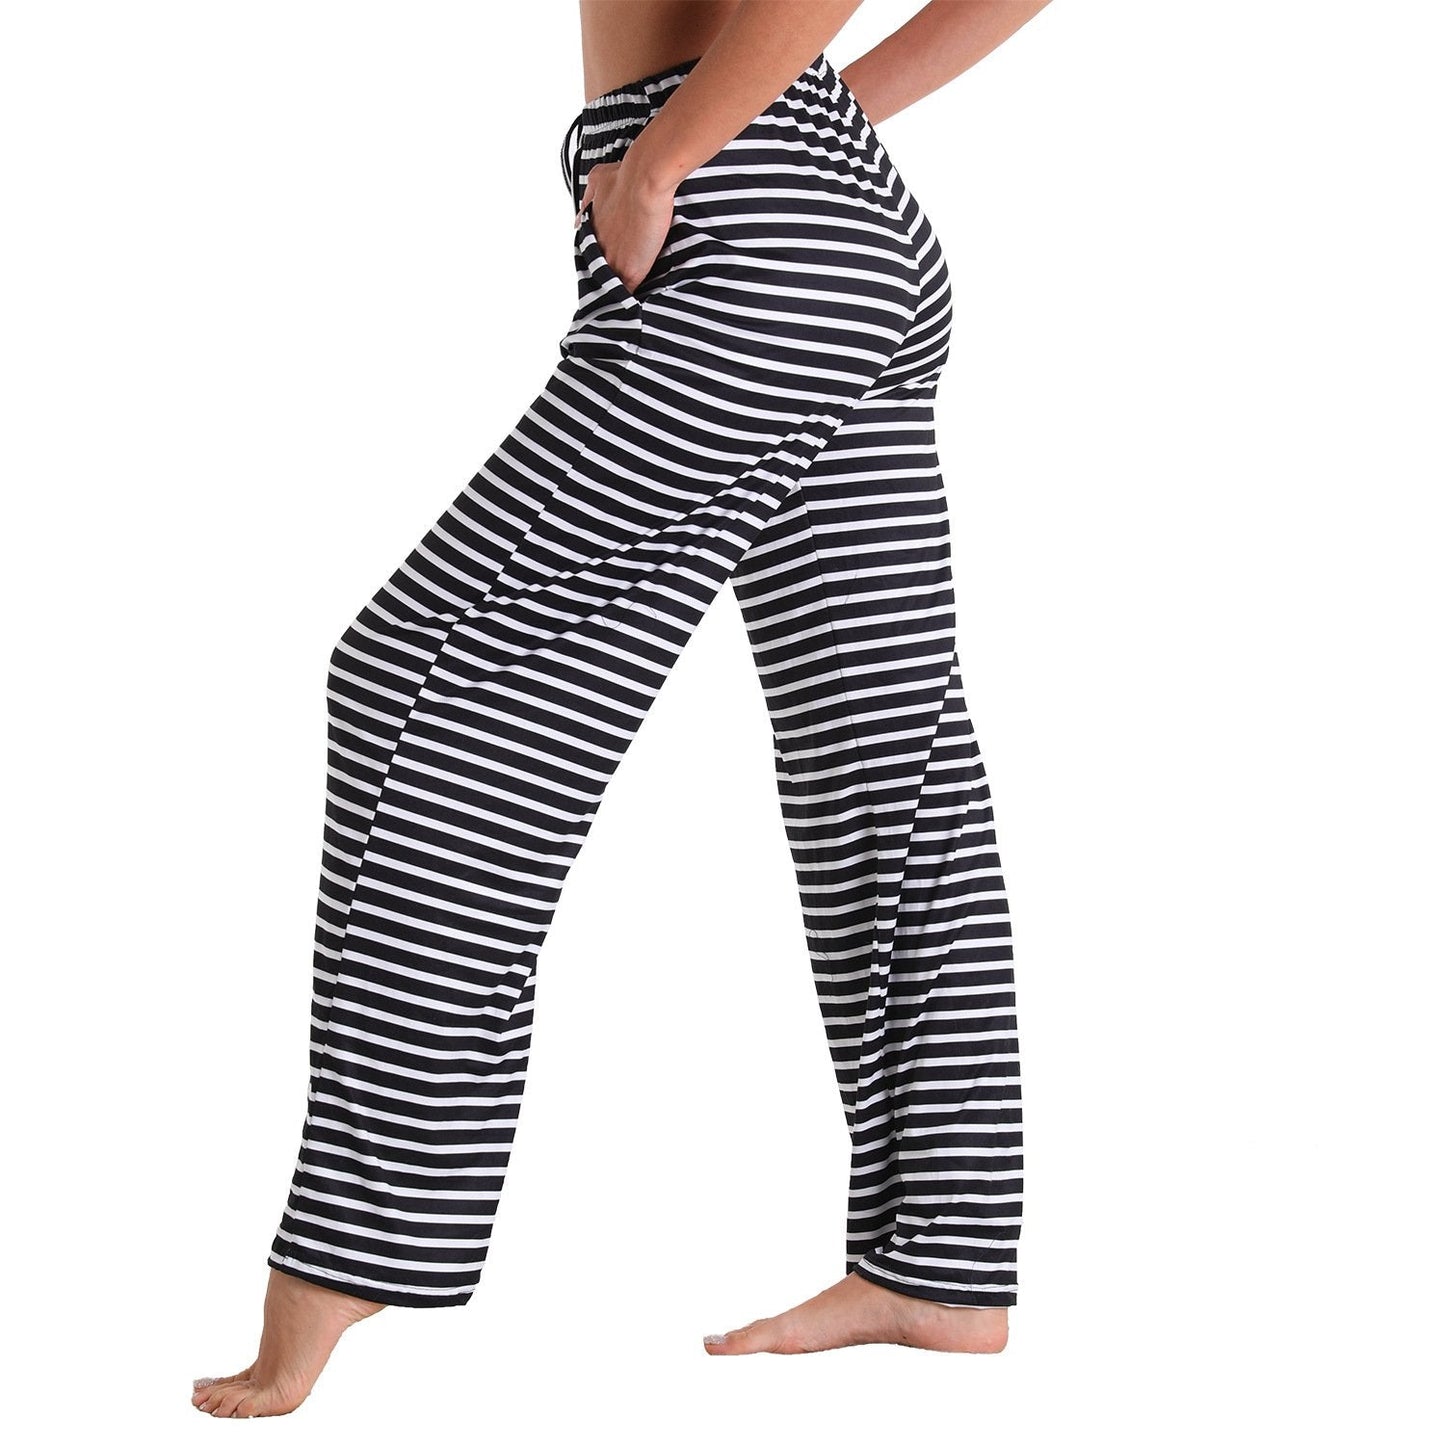 Leisure Women Comfortable Pants with Pocket-Pajamas-3011-S-Free Shipping Leatheretro